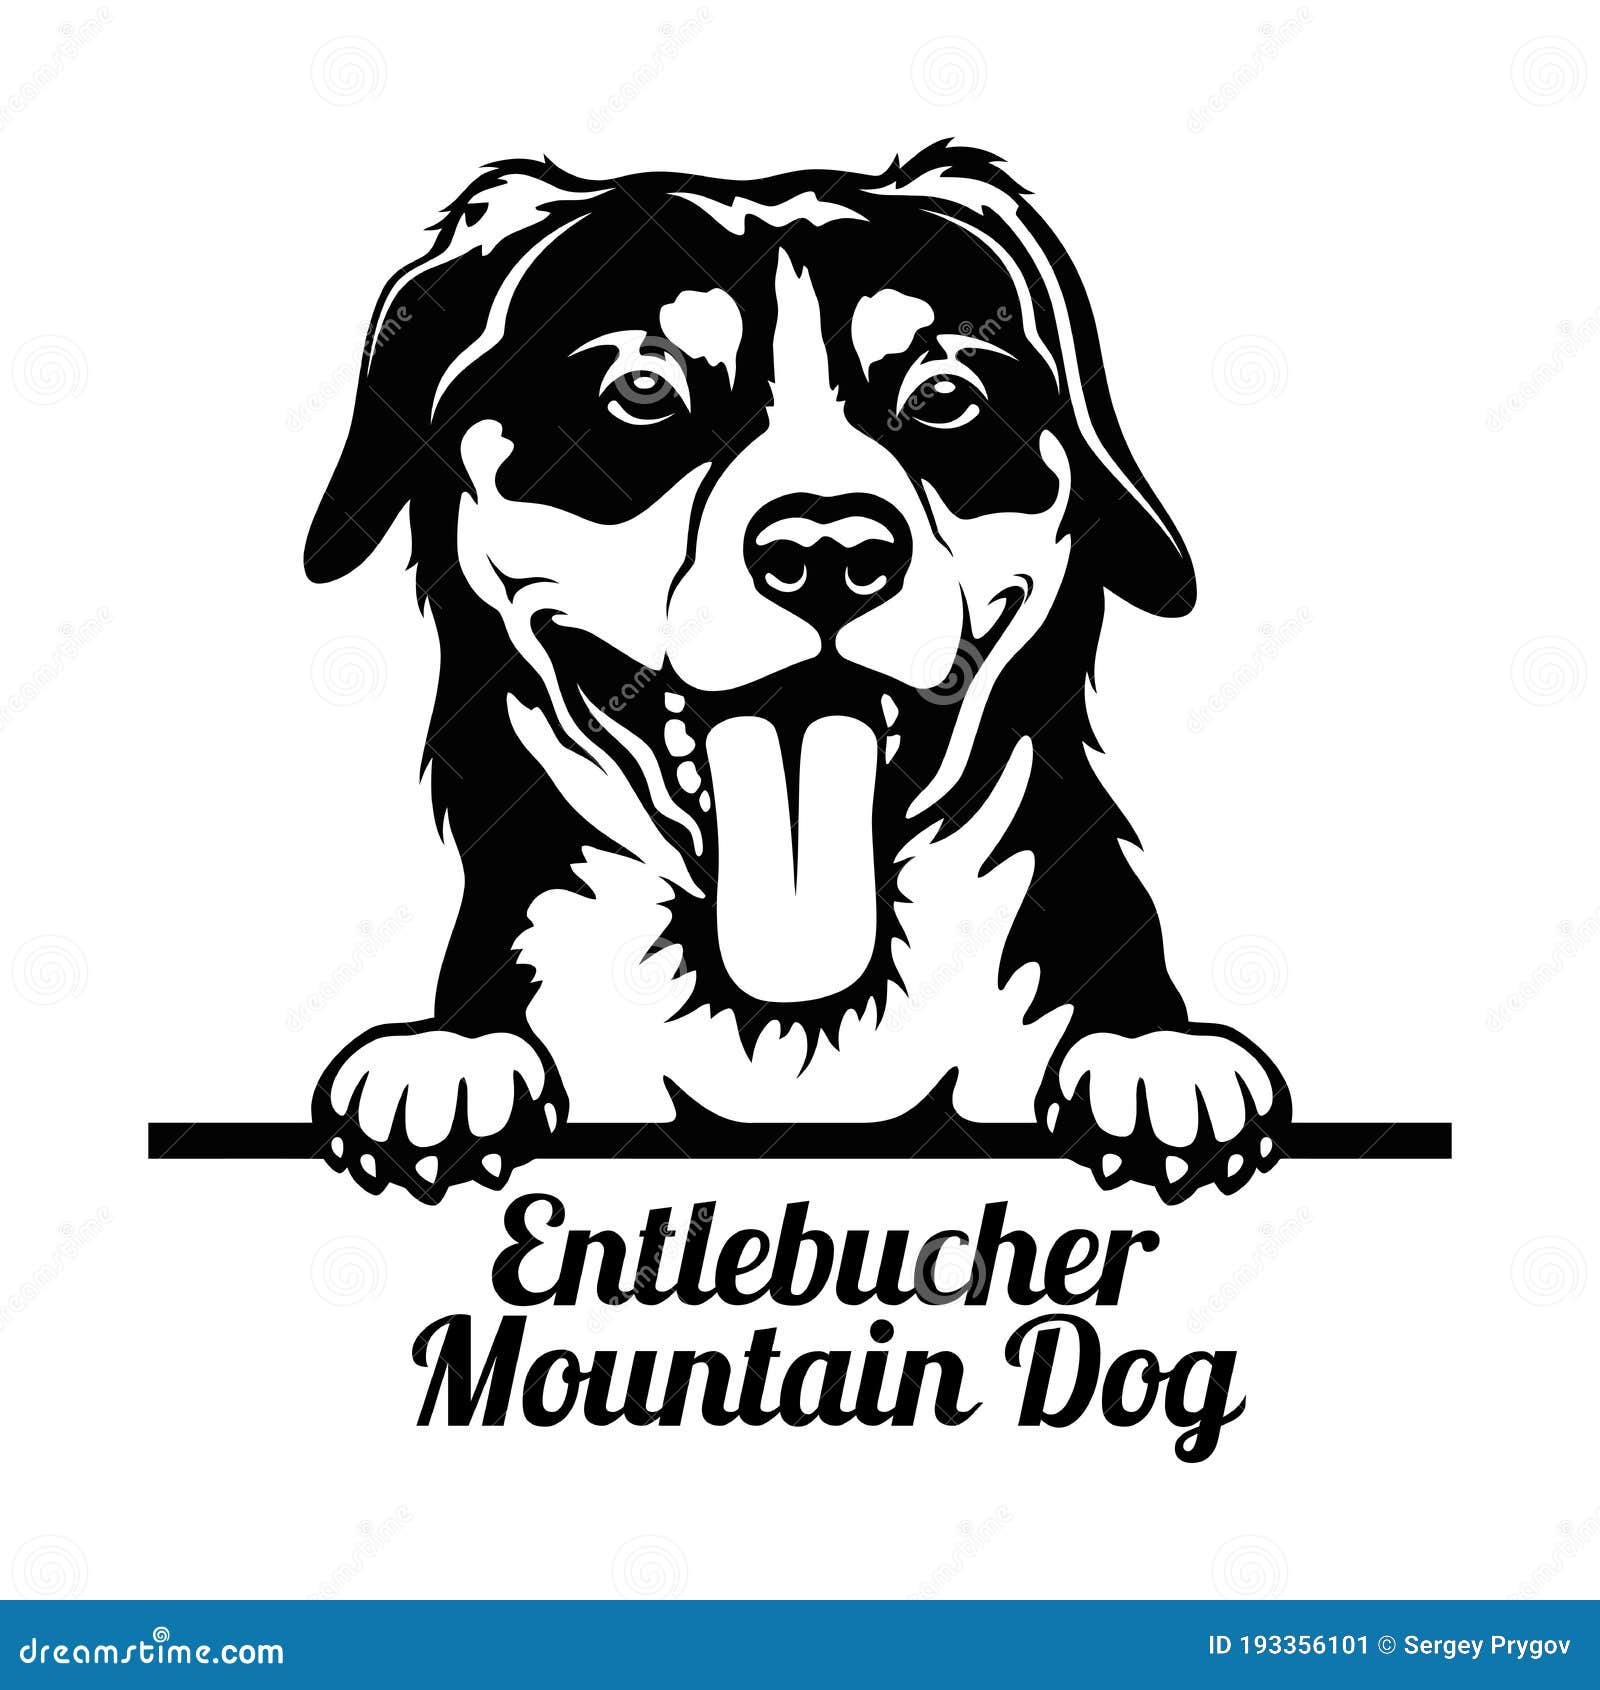 Peeking Dog - Entlebucher Mountain Dog Breed - Head Isolated on White ...